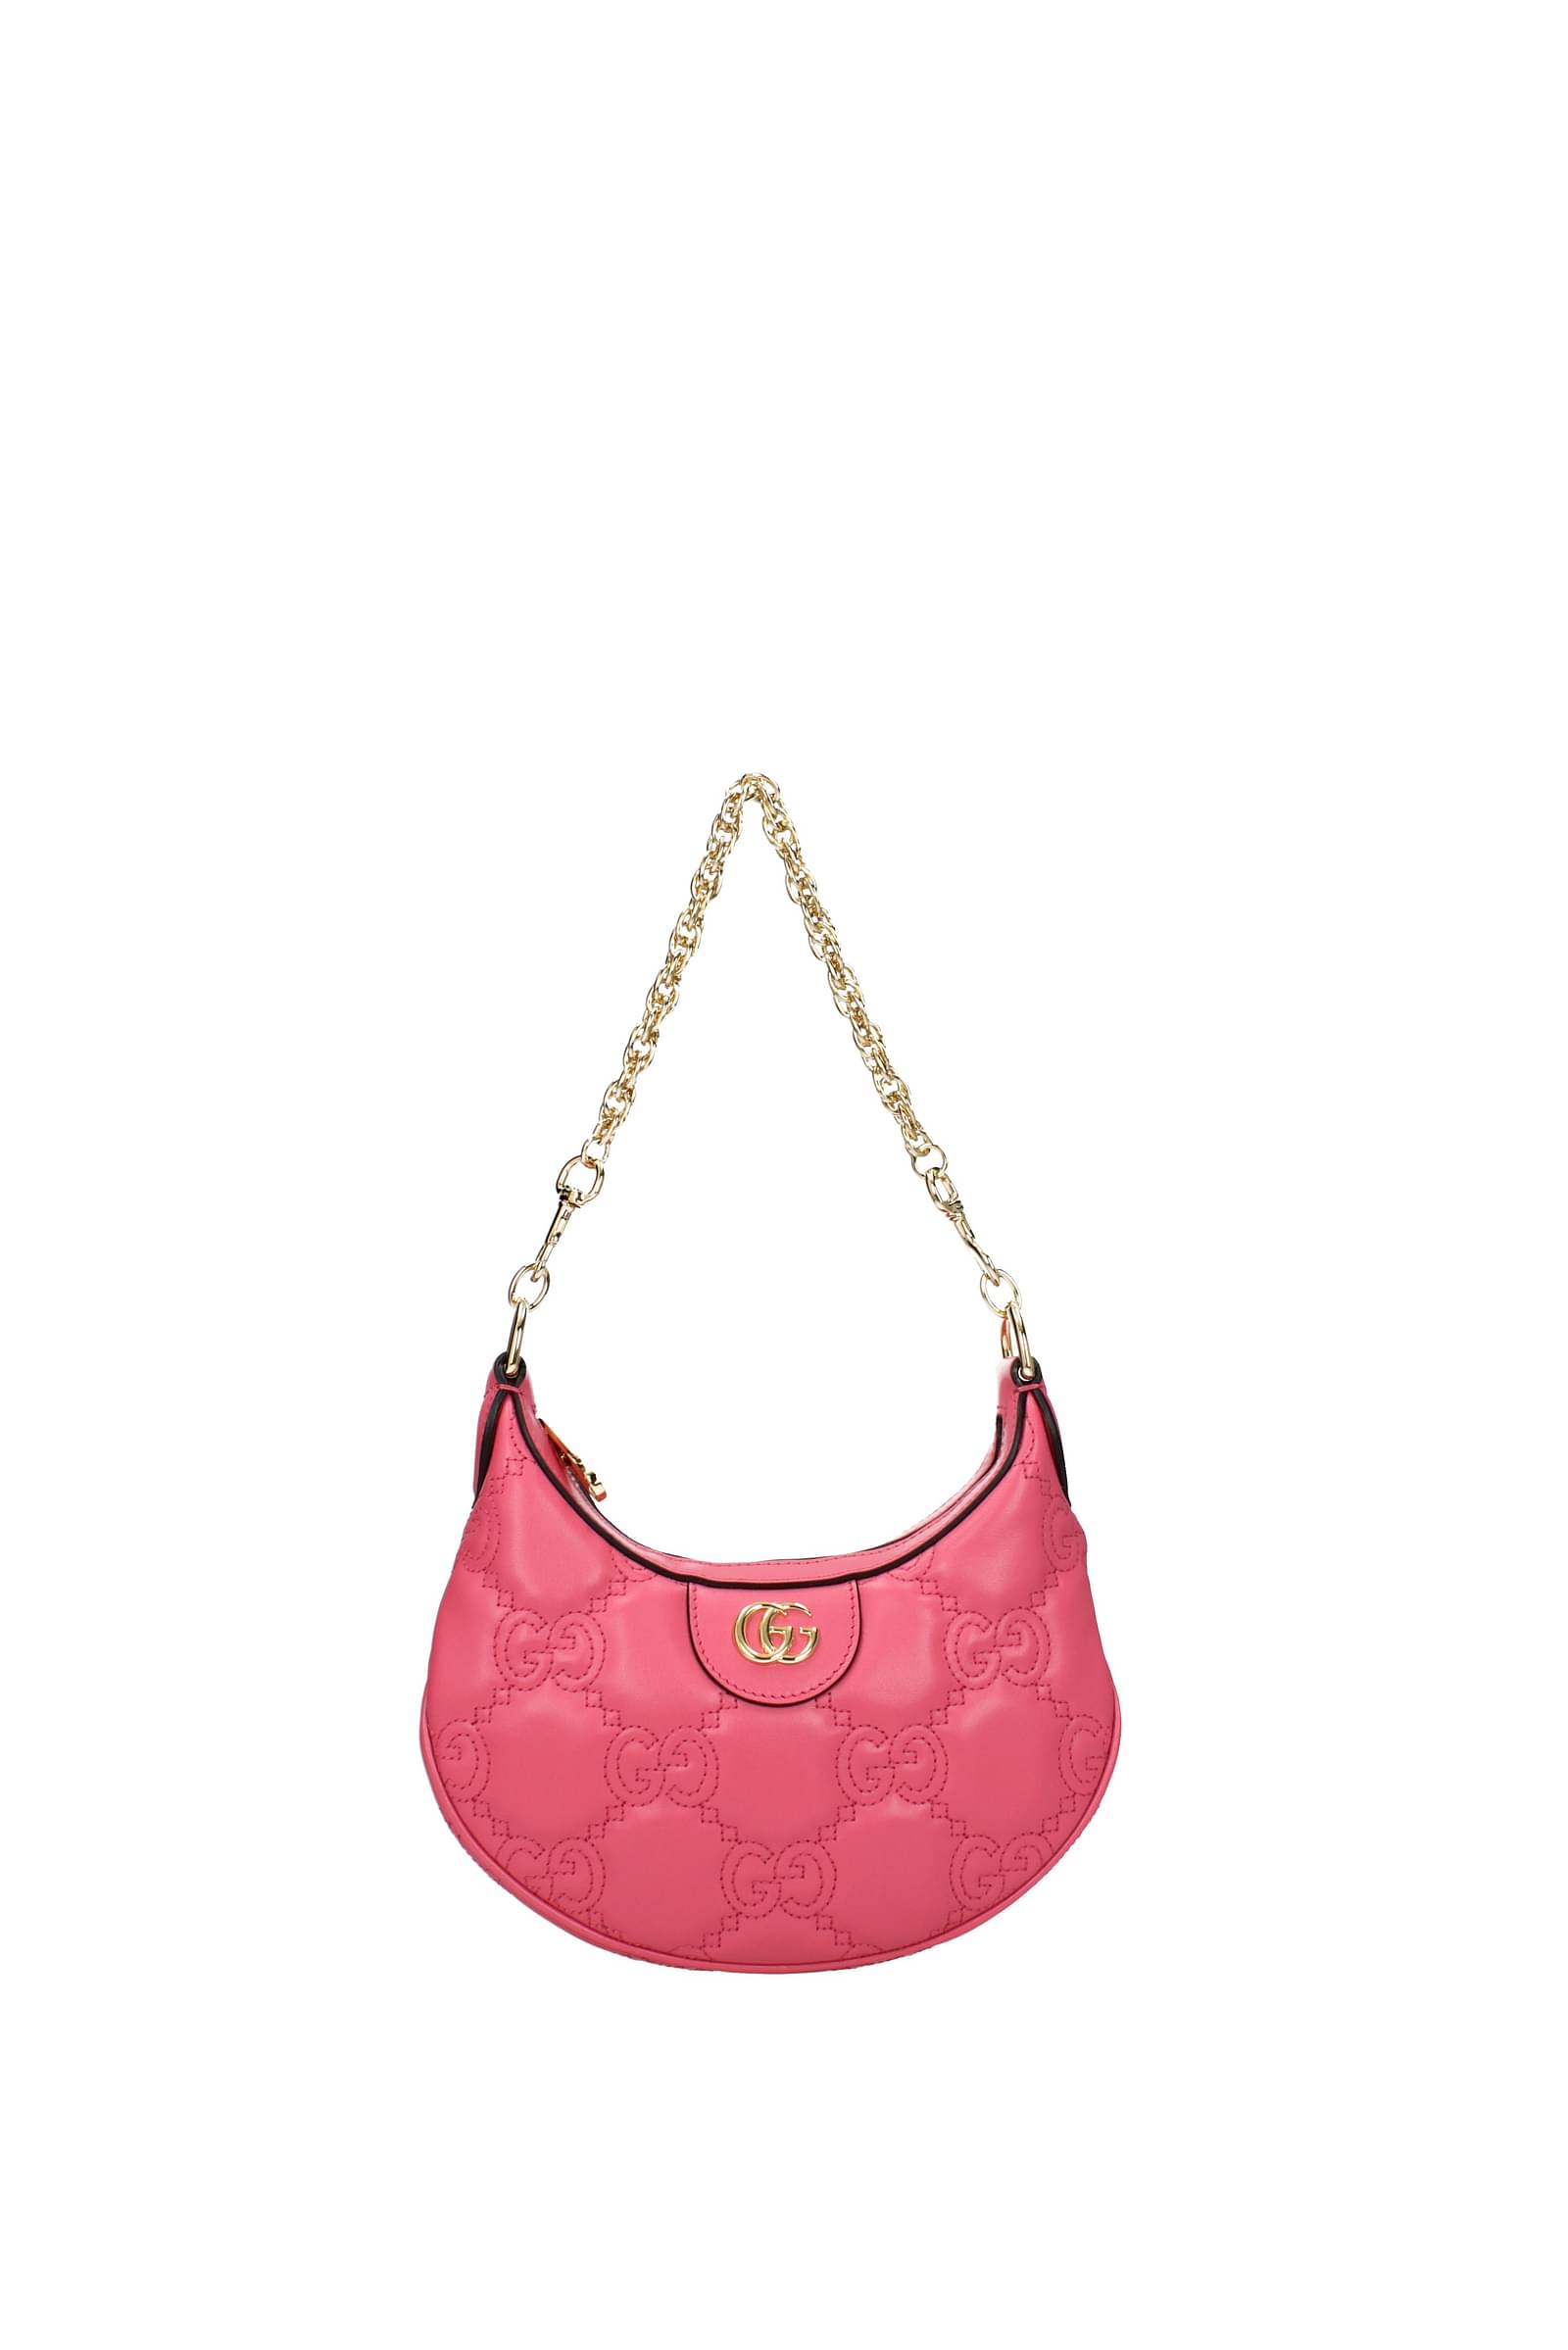 Spring Fashion | Gucci clutch, Bags, Women handbags